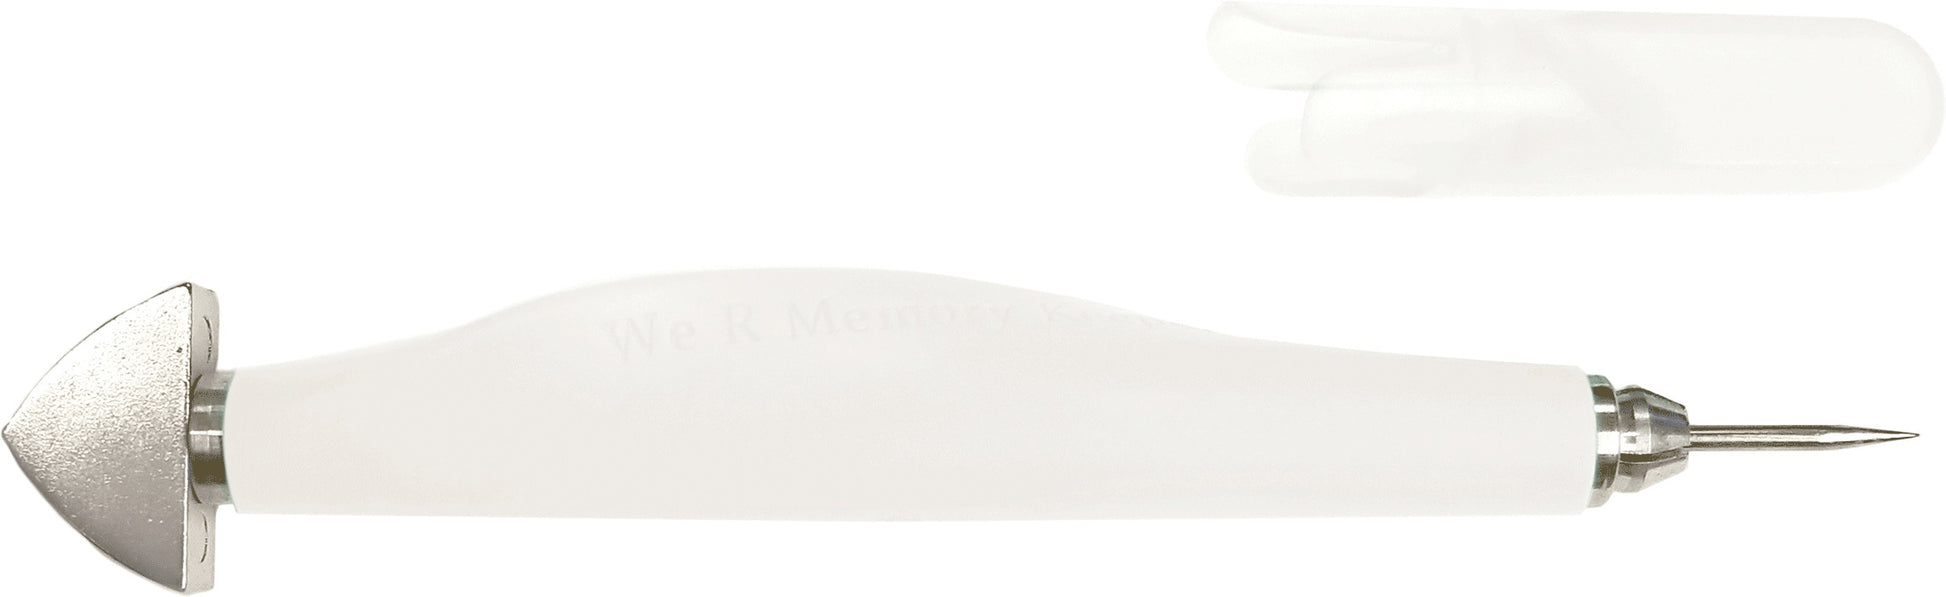 Brad Setter & American – Crafts Piercing Tool-White